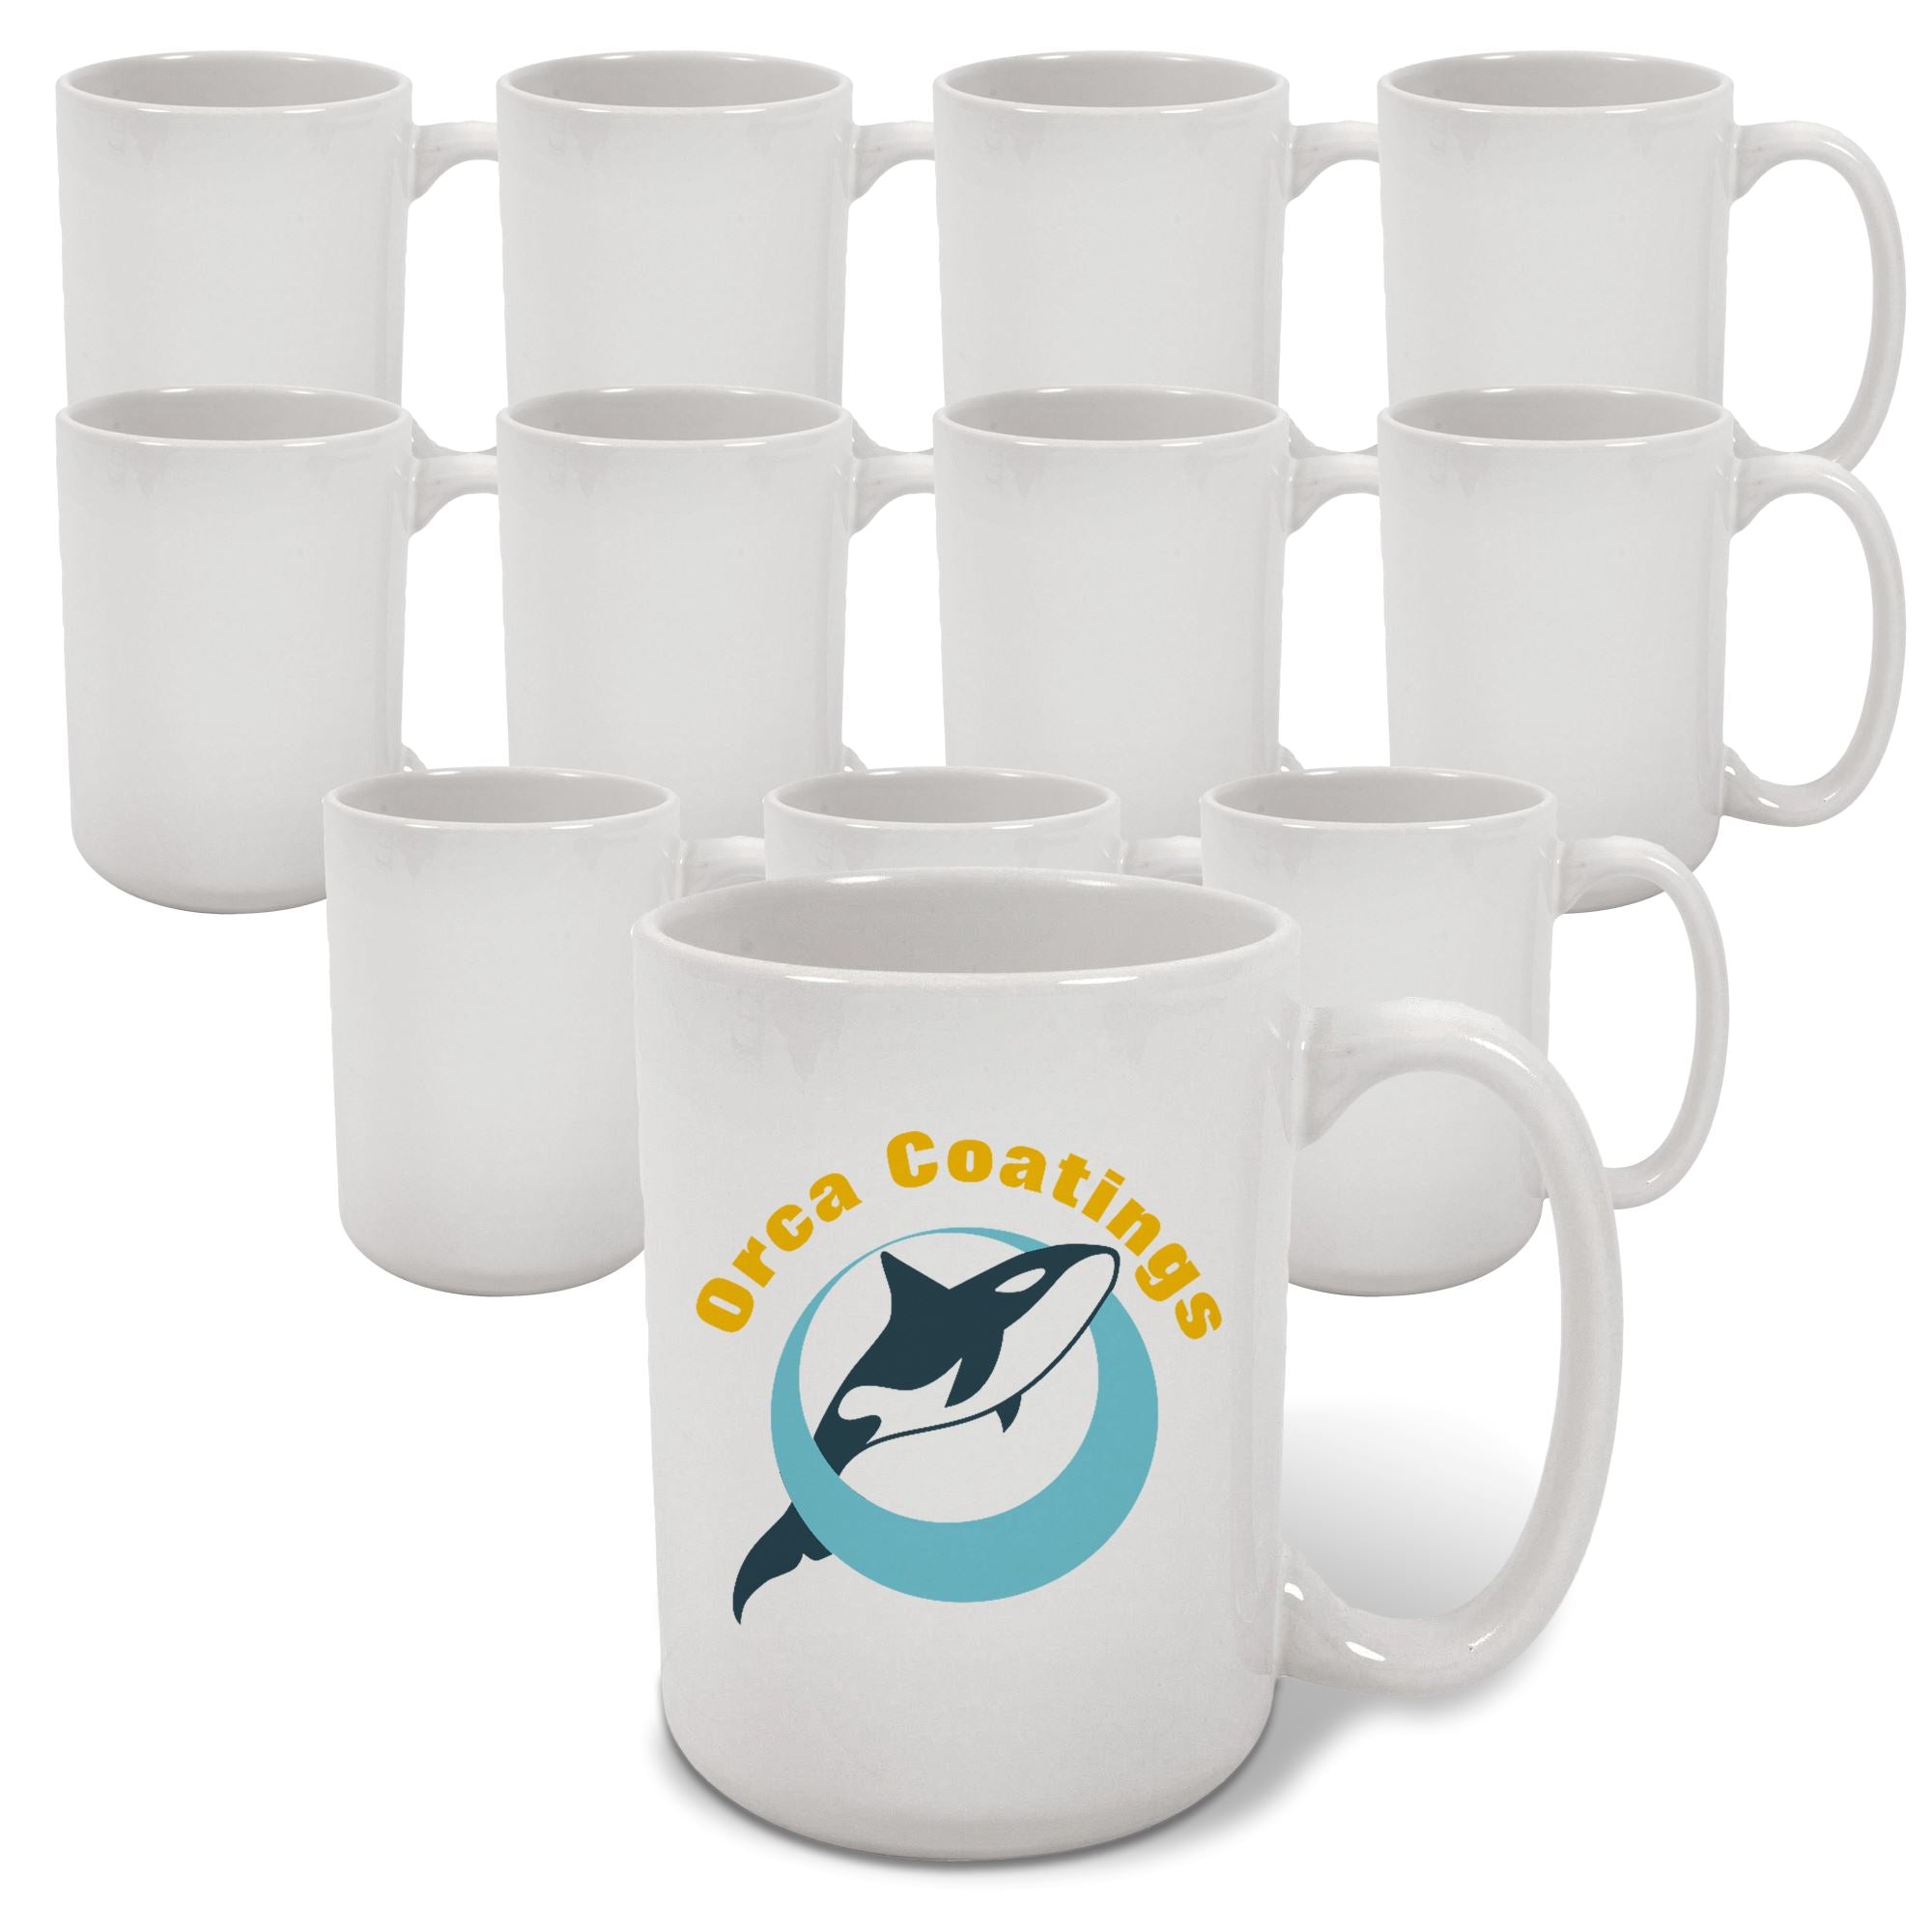 Ceramic Coated Mugs: Is This The Best Coffee Mug?